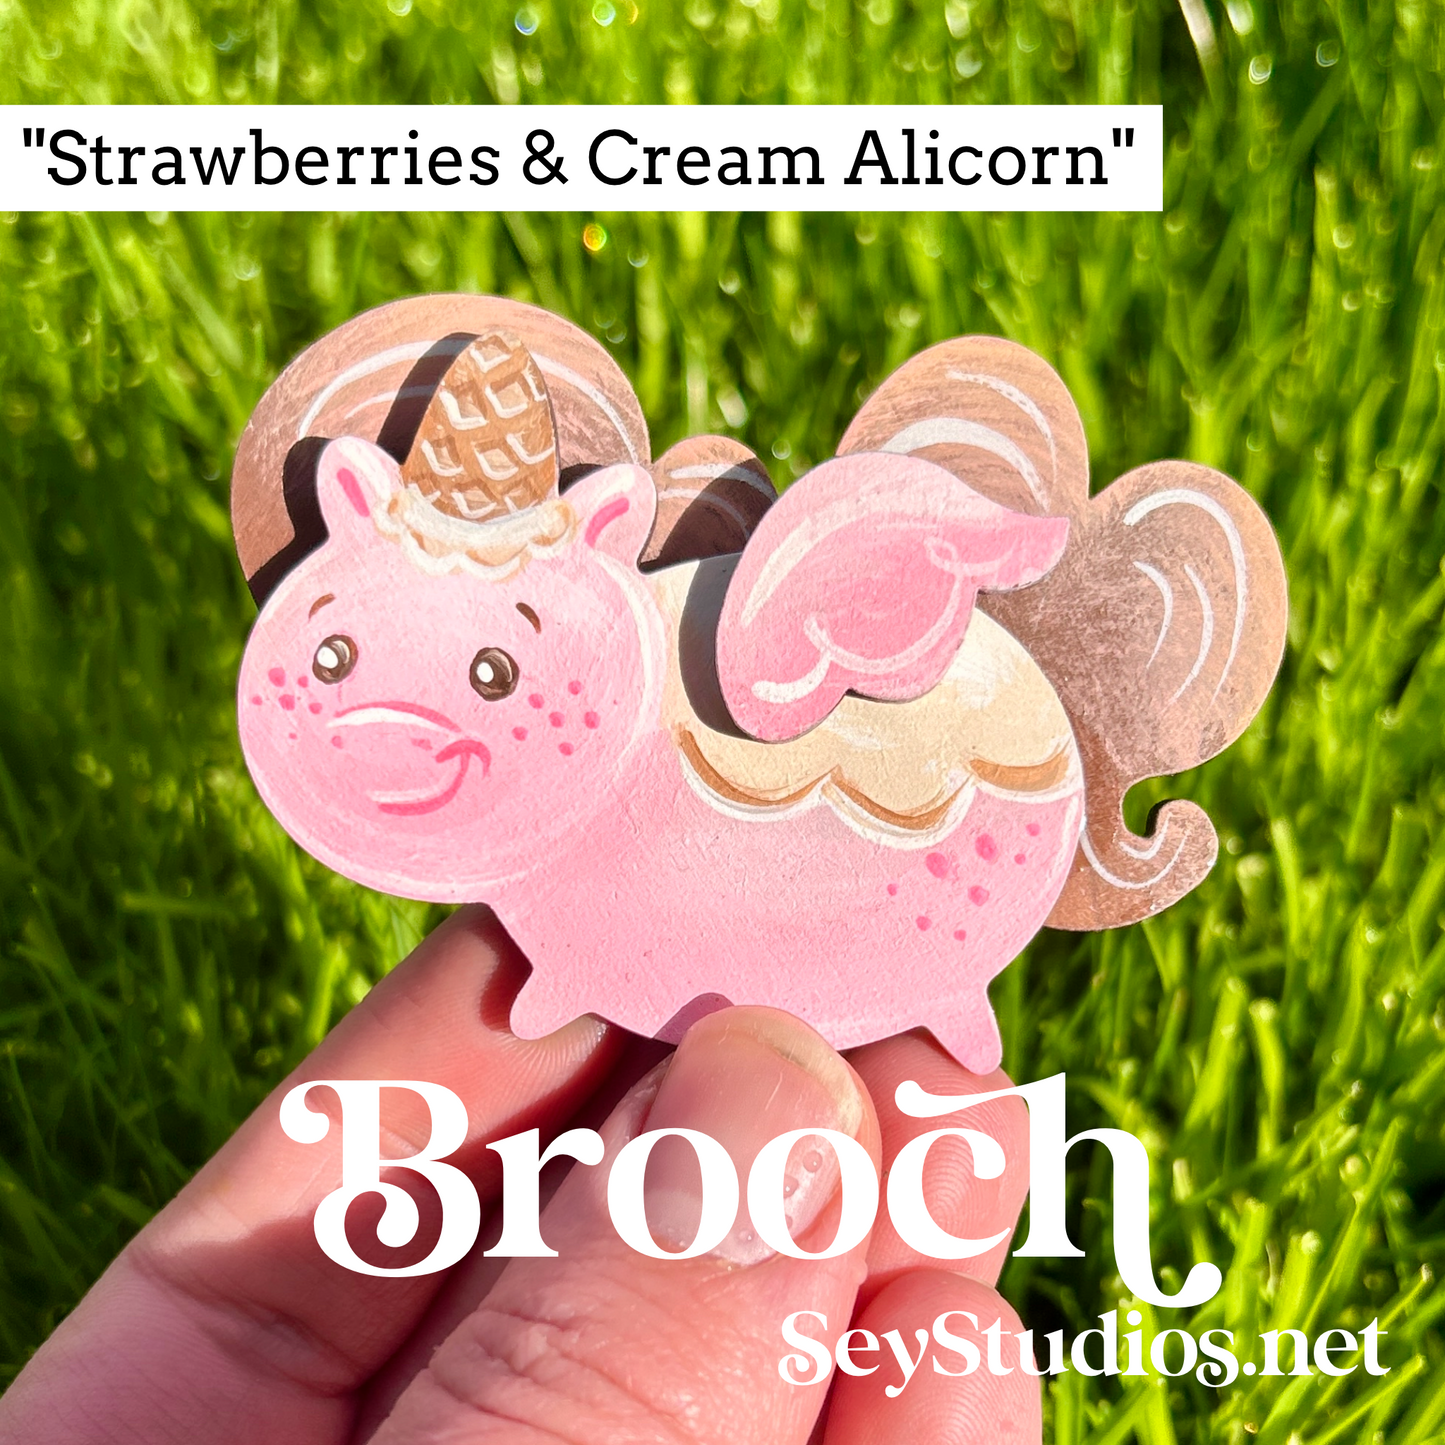 Brooch - “Strawberries & Cream Alicorn”